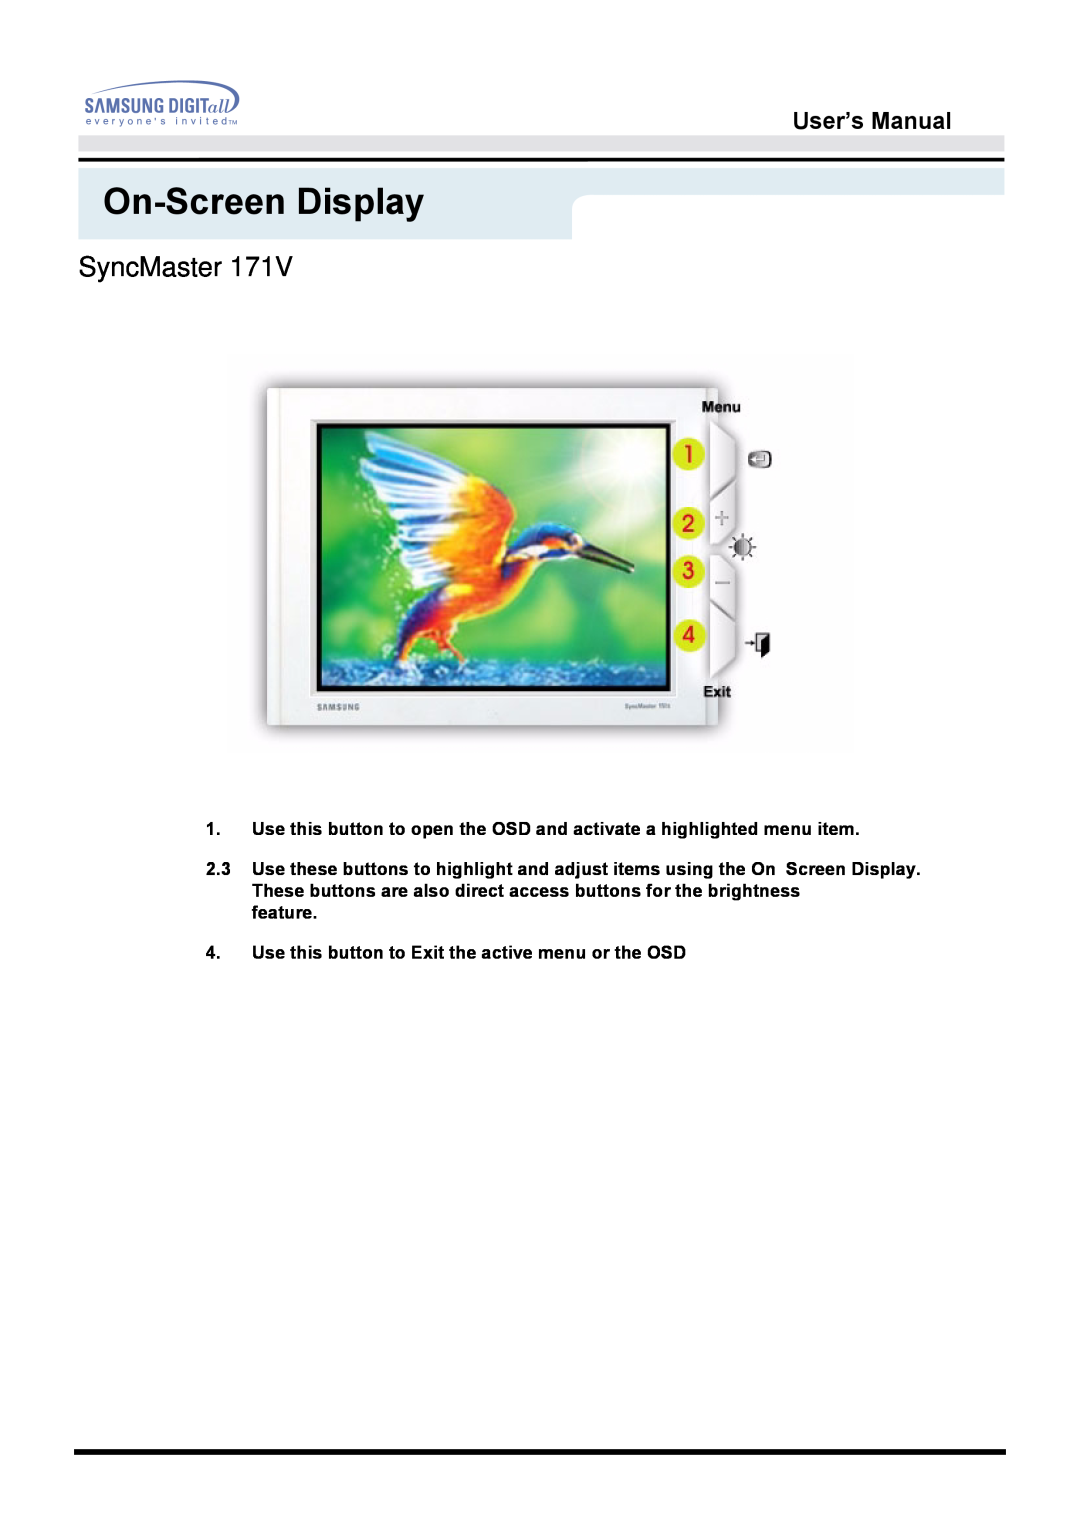 Samsung 760TFT manual User’s Manual, On-Screen Display, SyncMaster 